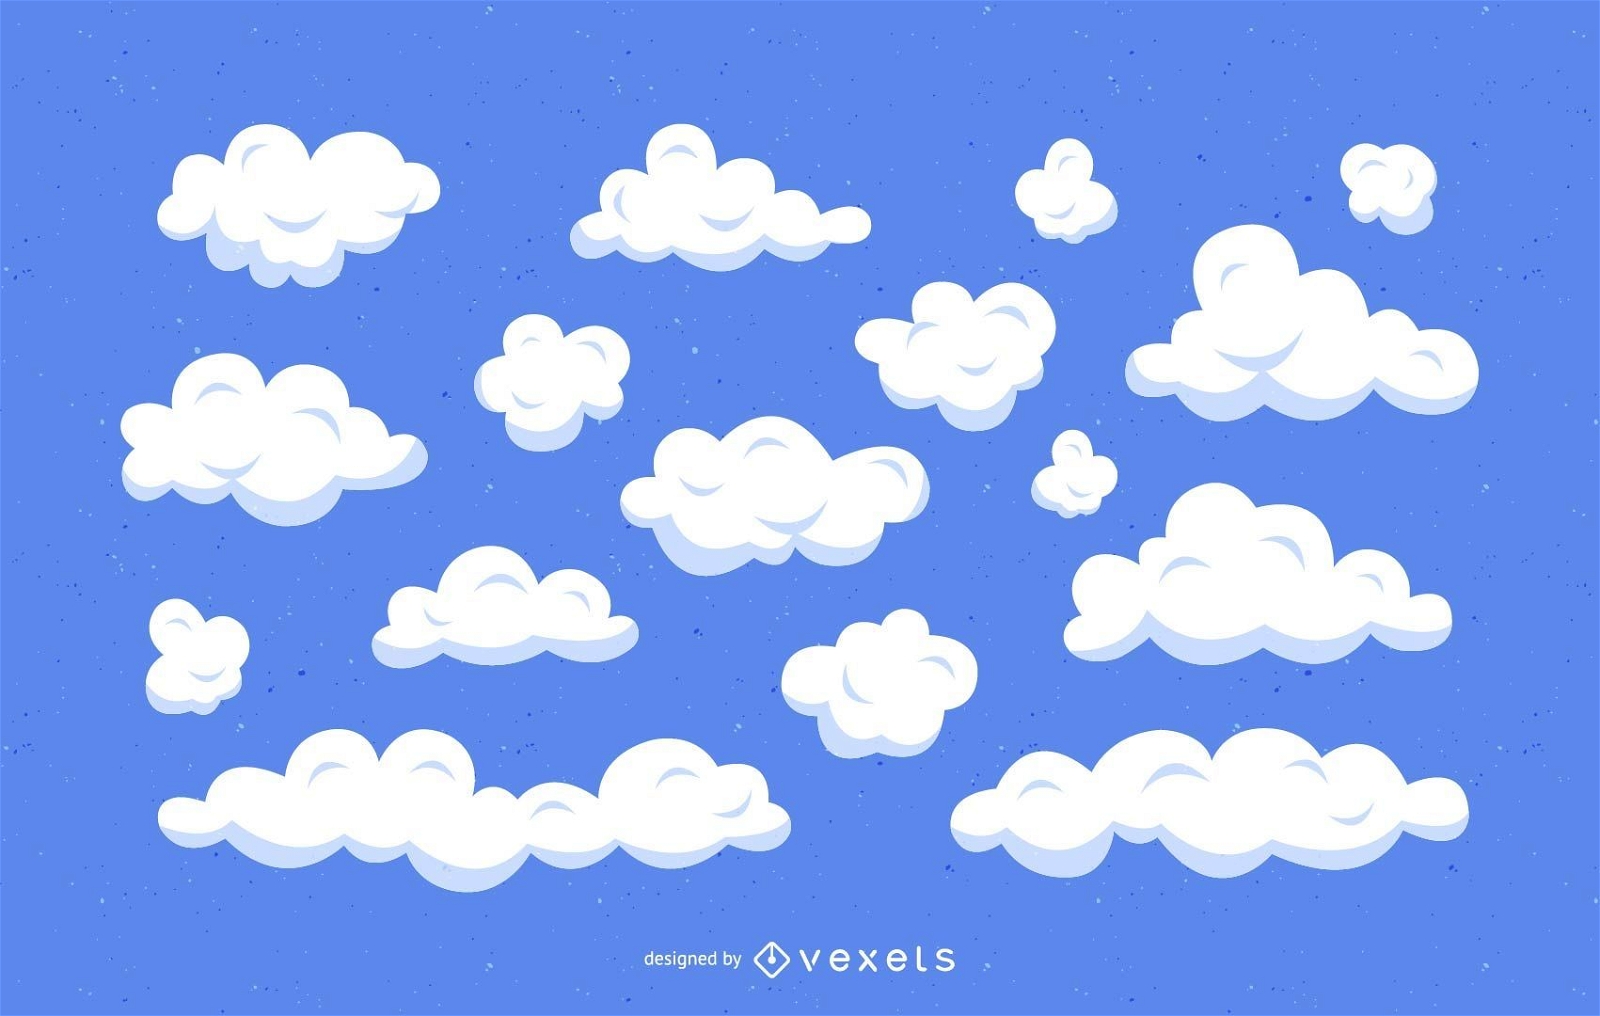 Clouds cartoon illustration set